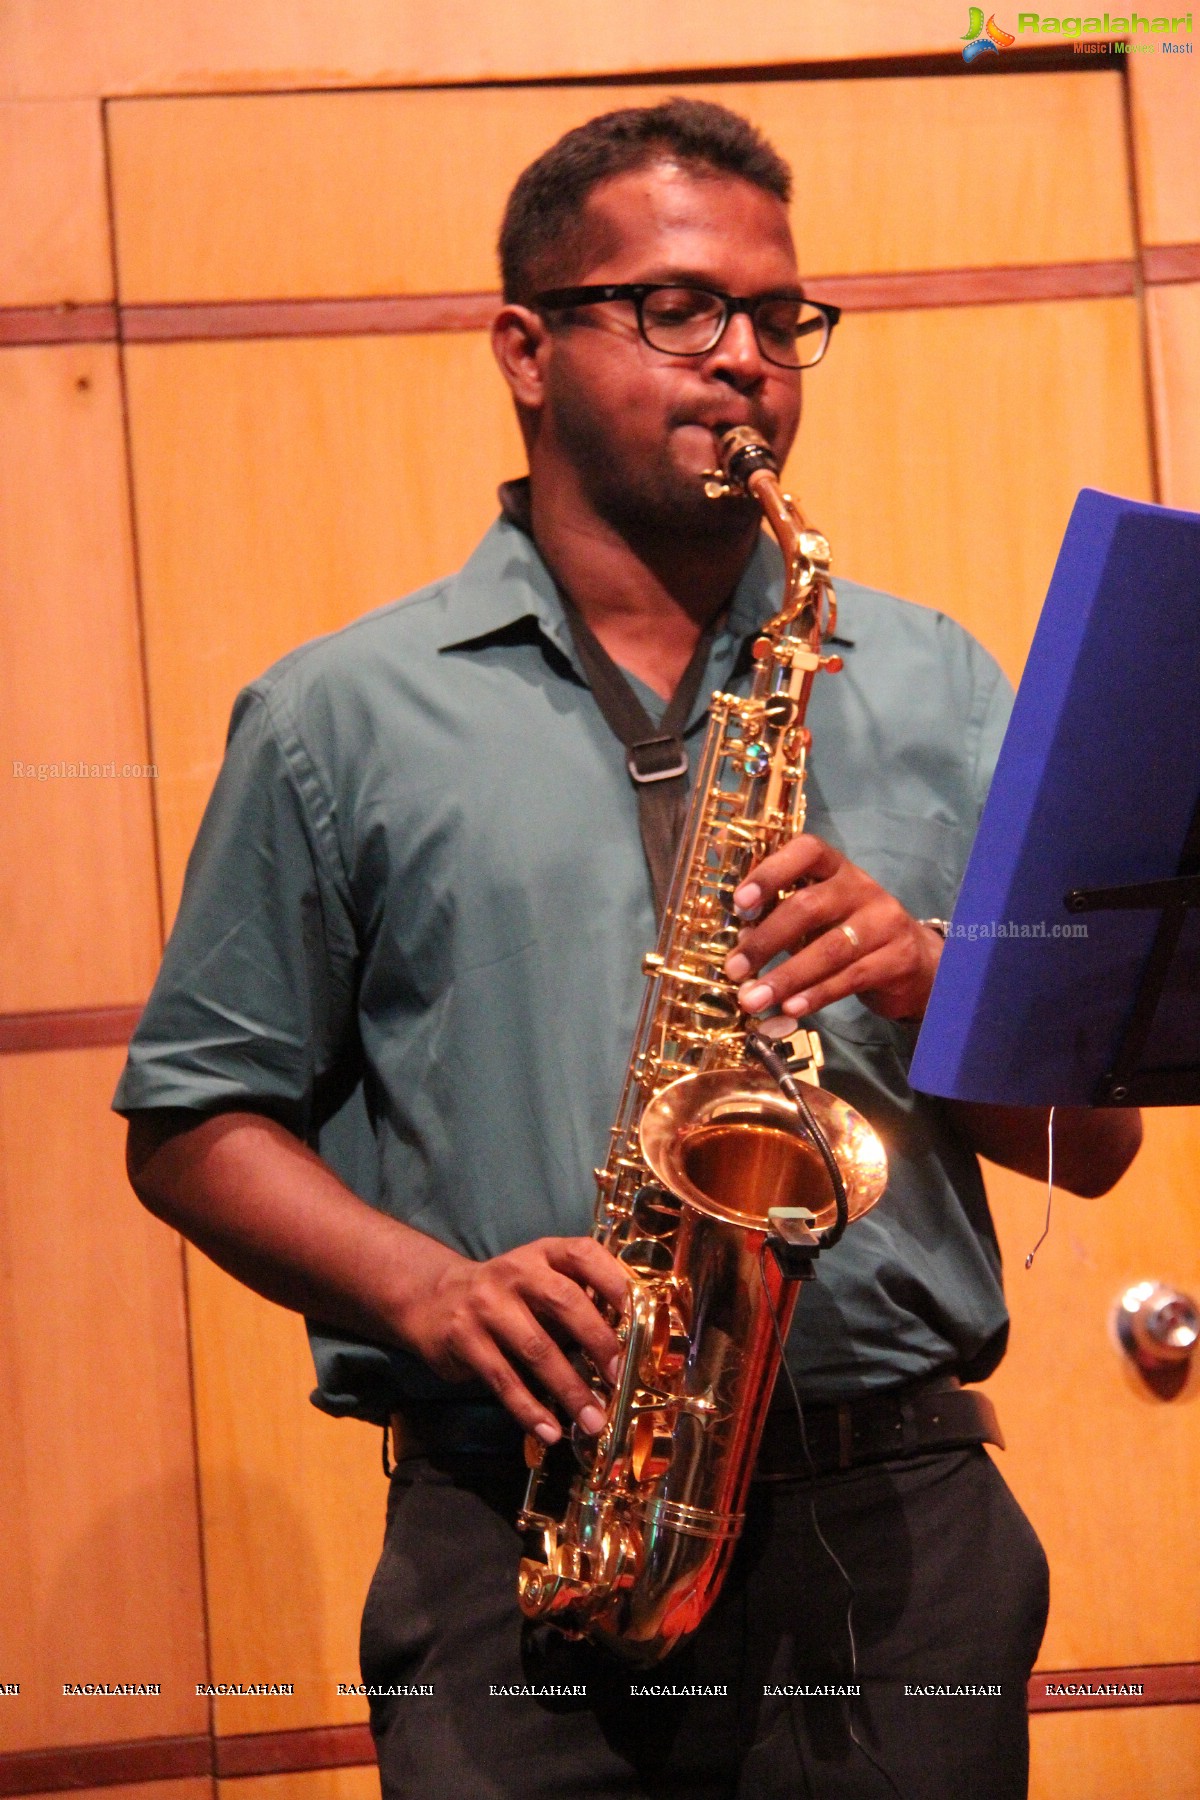 Monsoon Jazz 2014: Concert With The Sharik Hasan Quartet